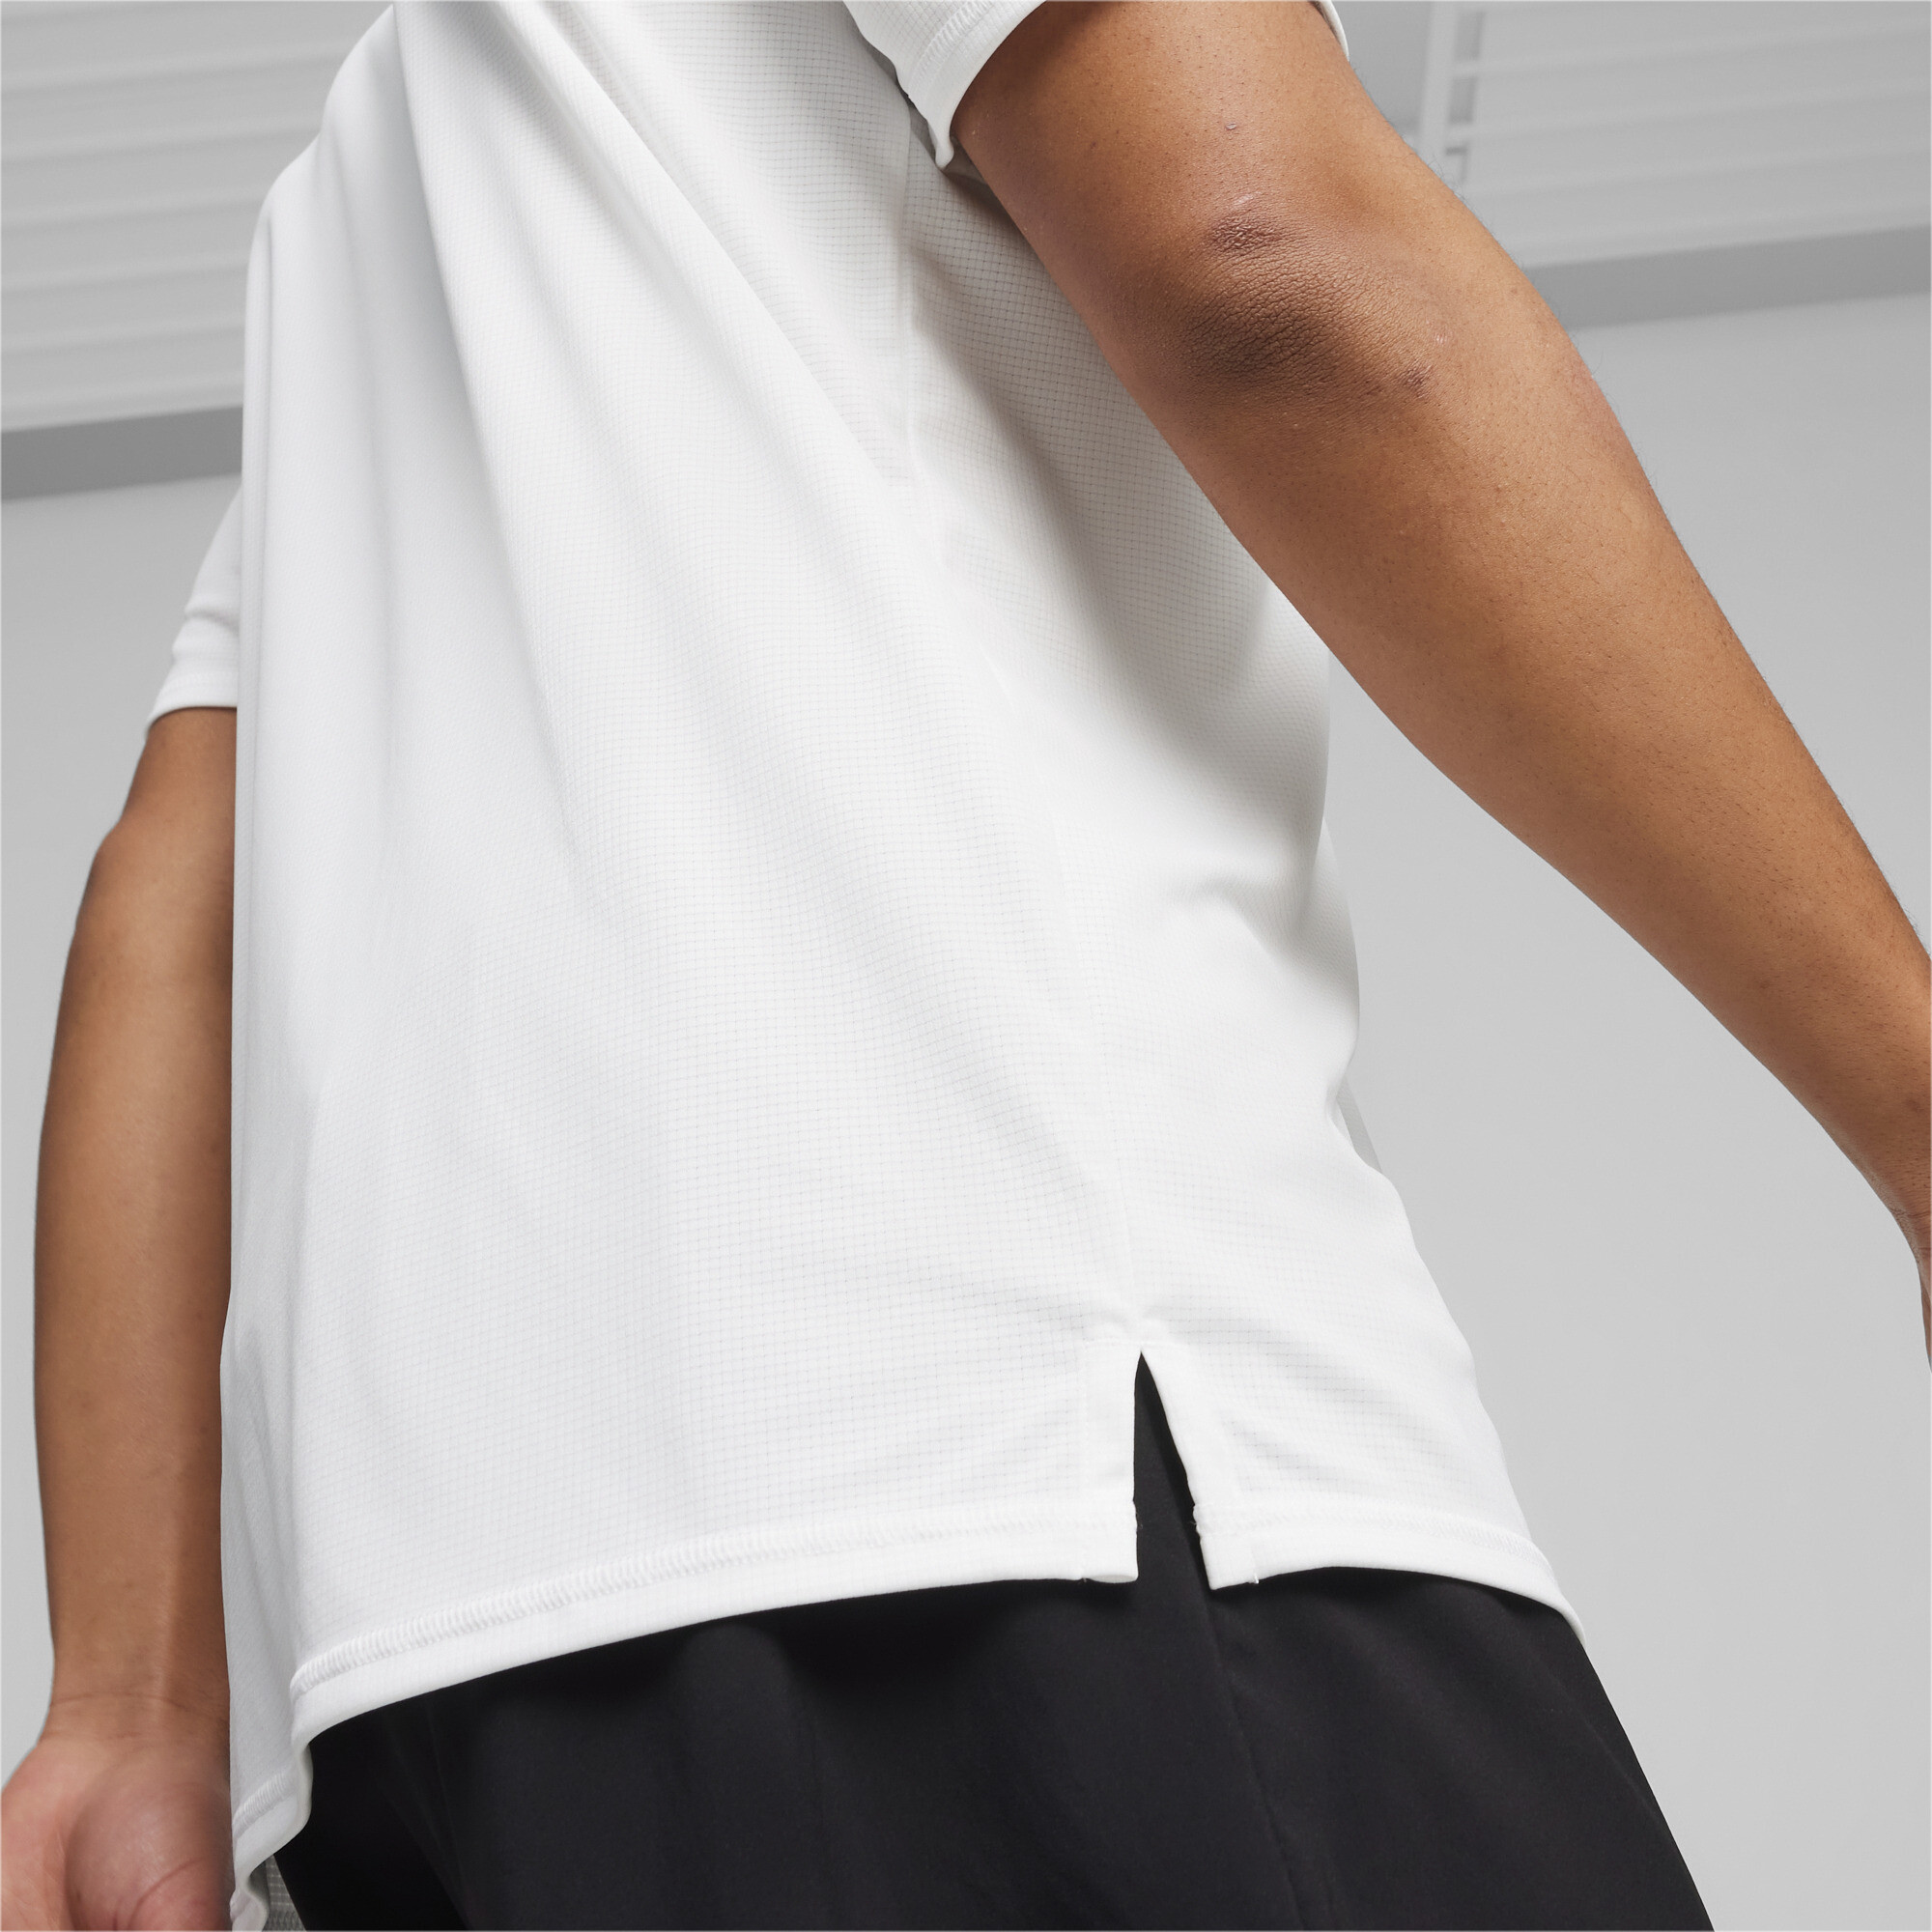 Men's PUMA RUN FAVORITE Graphic T-Shirt In White, Size XS